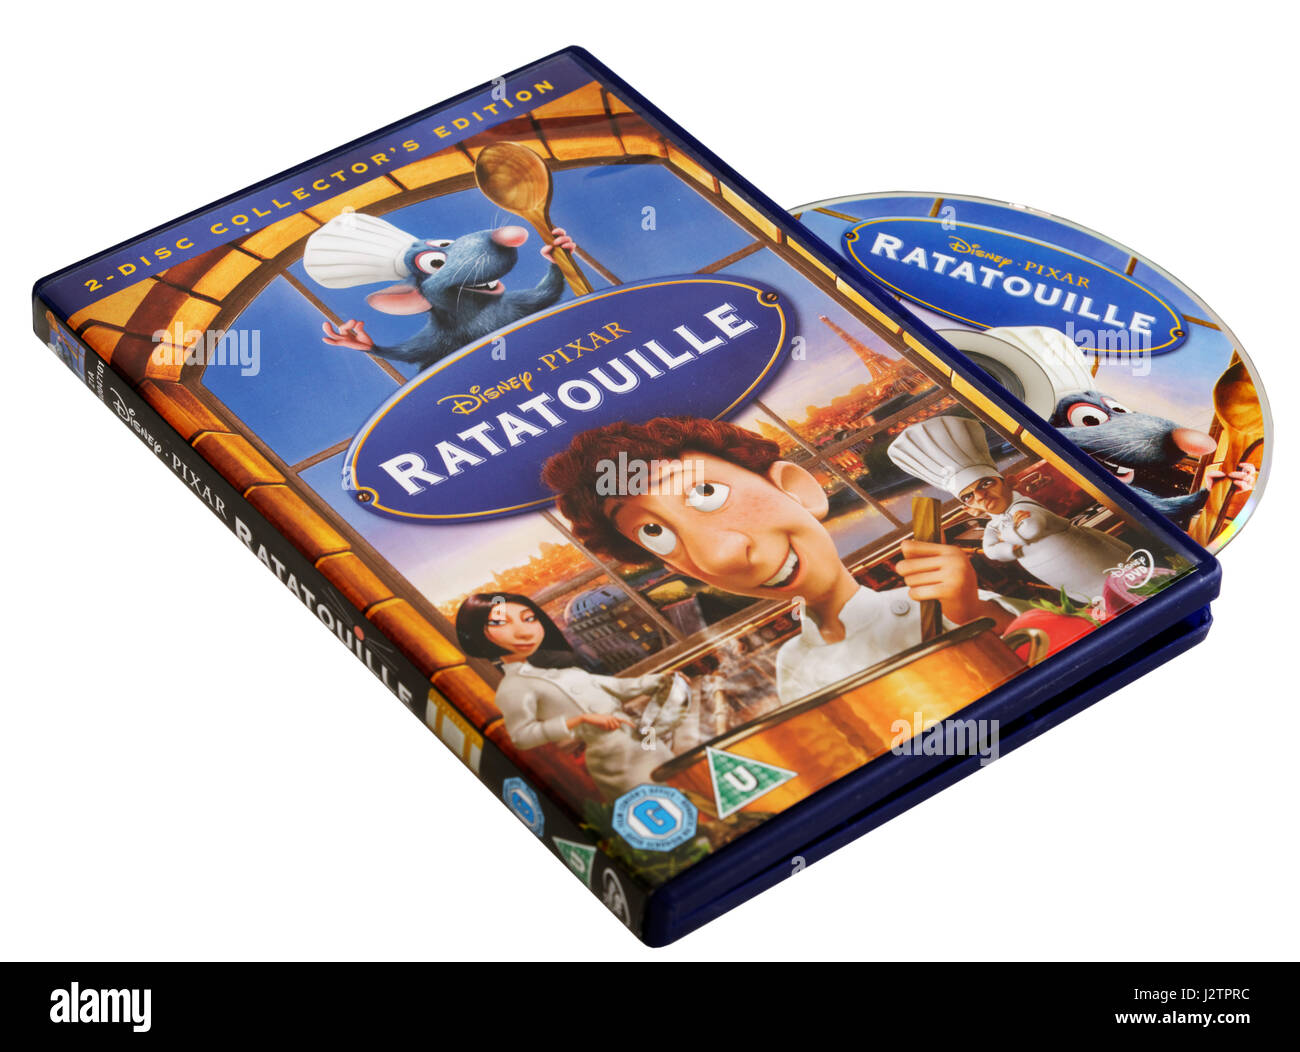 Disney's Ratatouille DVD Stock Photo - Alamy